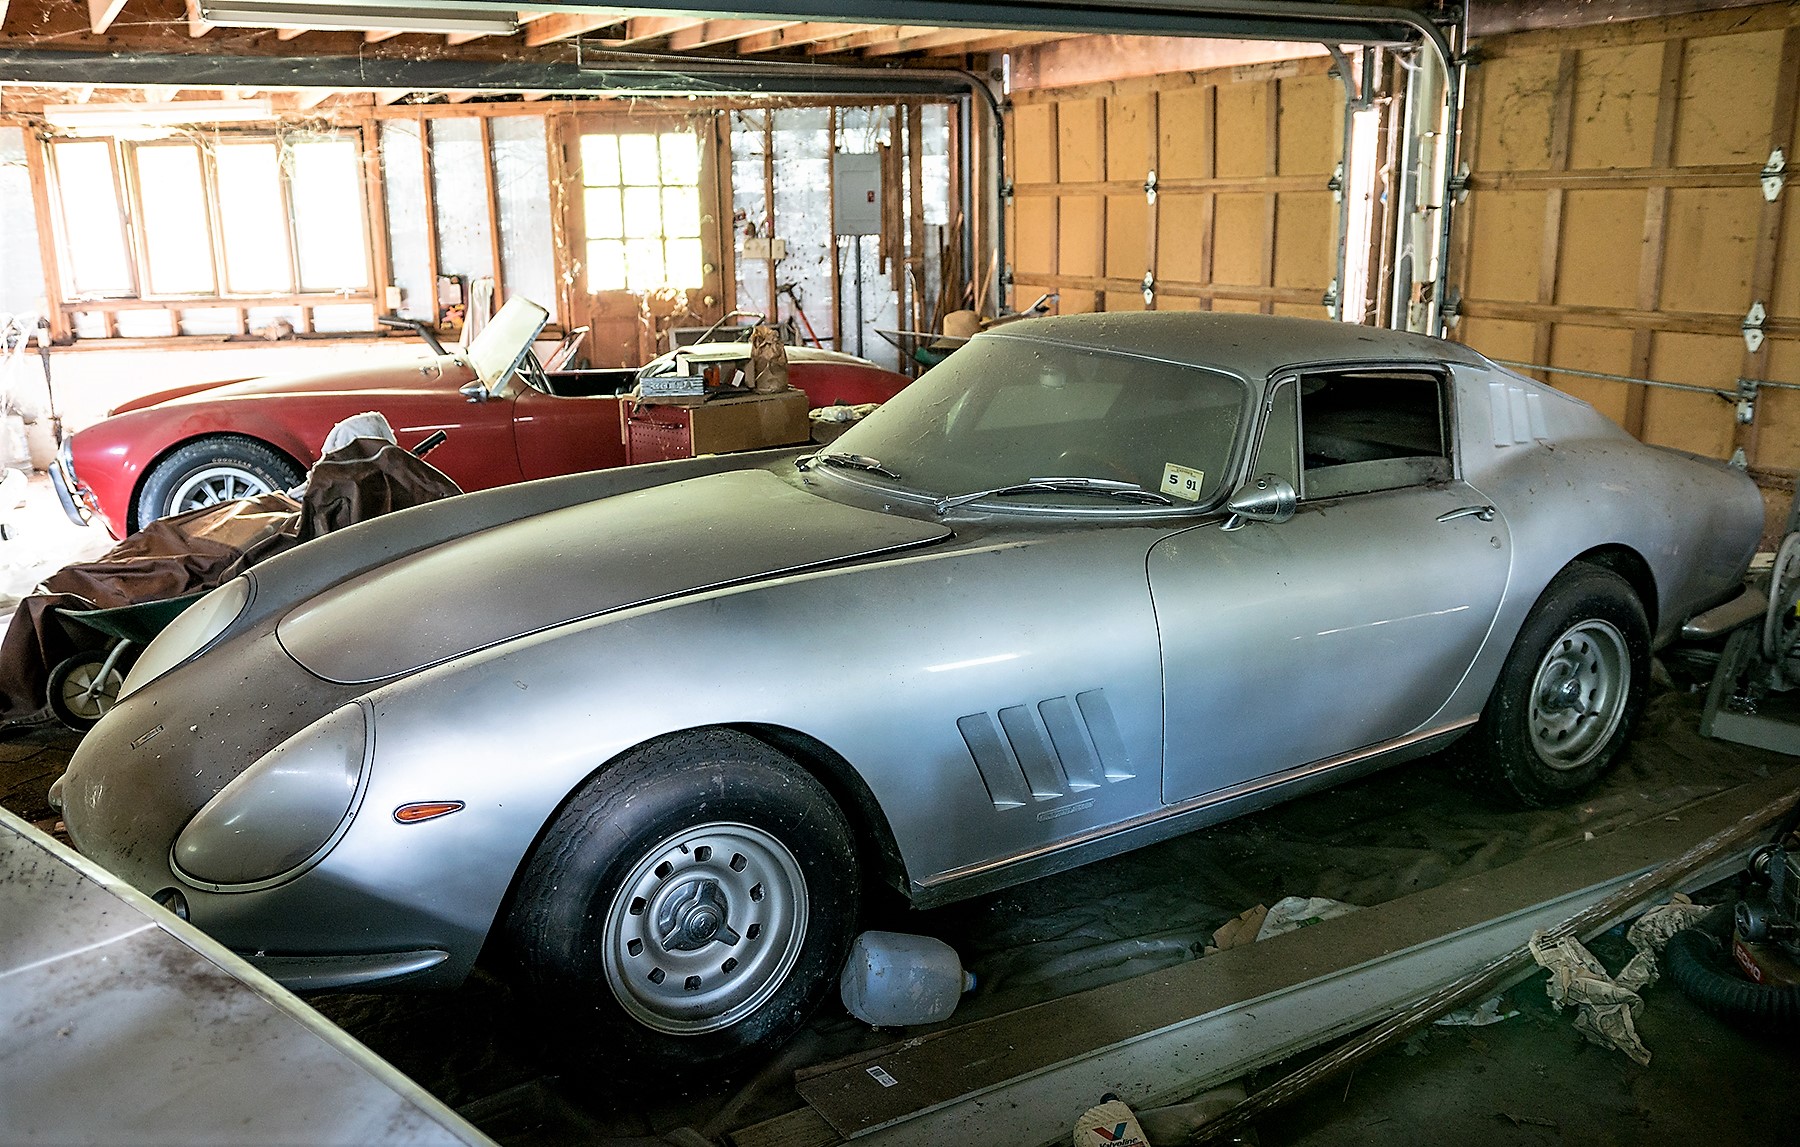 , ‘Barn-find’ gems: Ferrari, Cobra rescued, set for Gooding&#8217;s Amelia Island auction, ClassicCars.com Journal